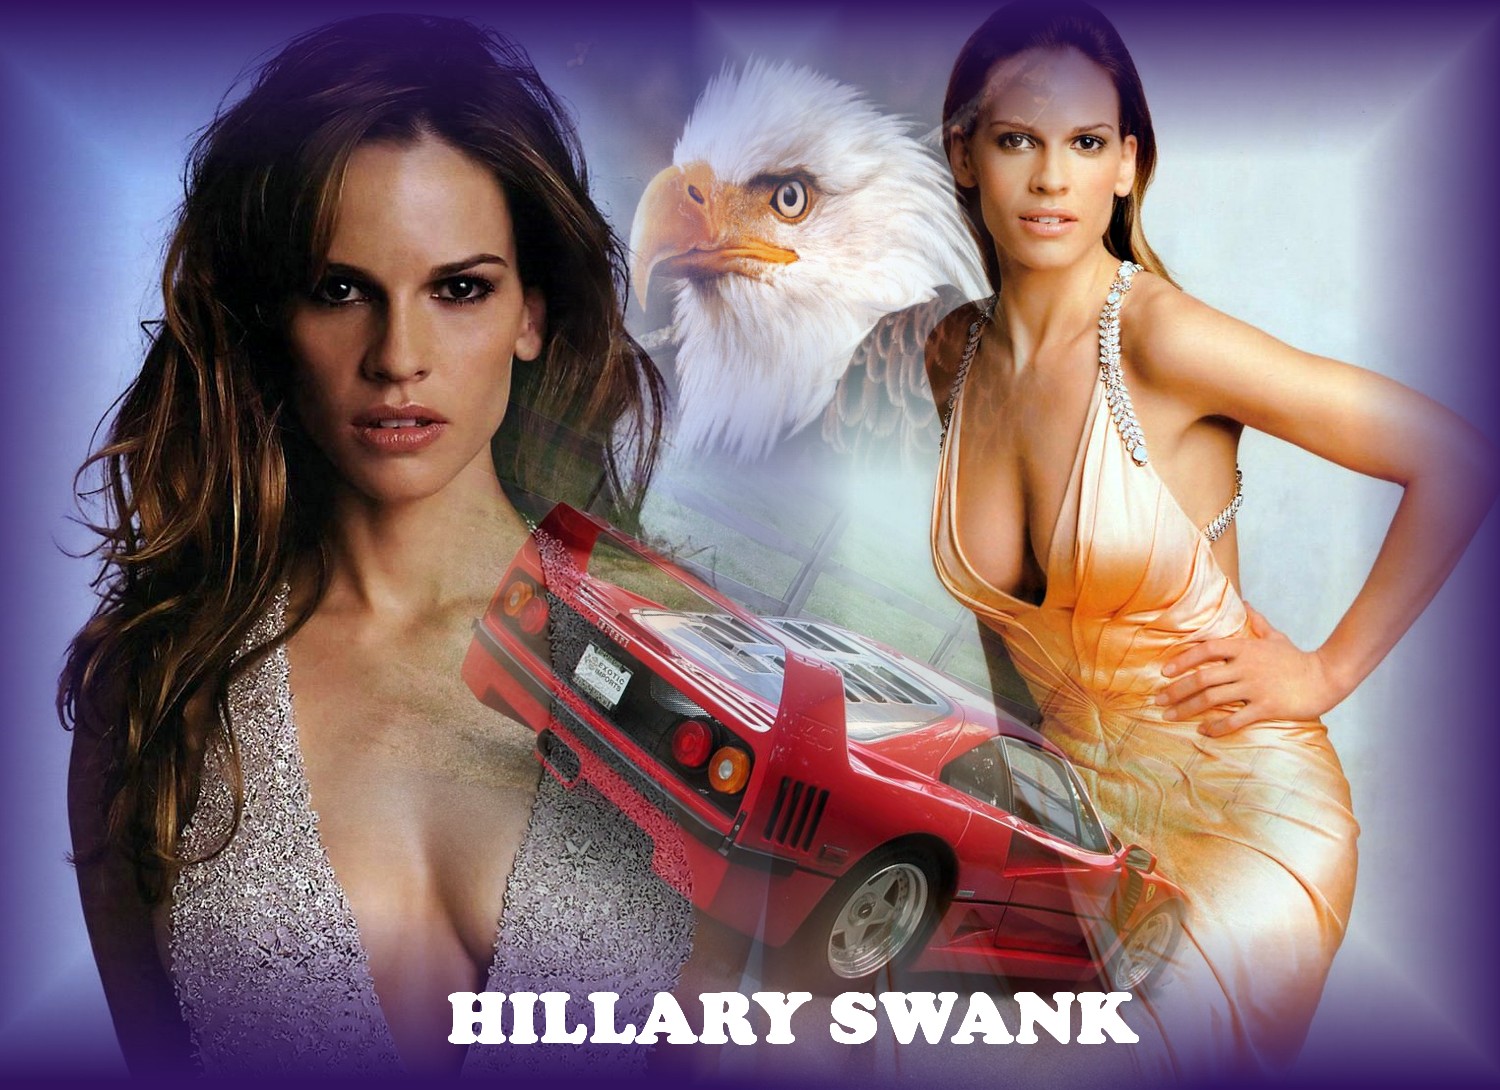 Hilary swank 7